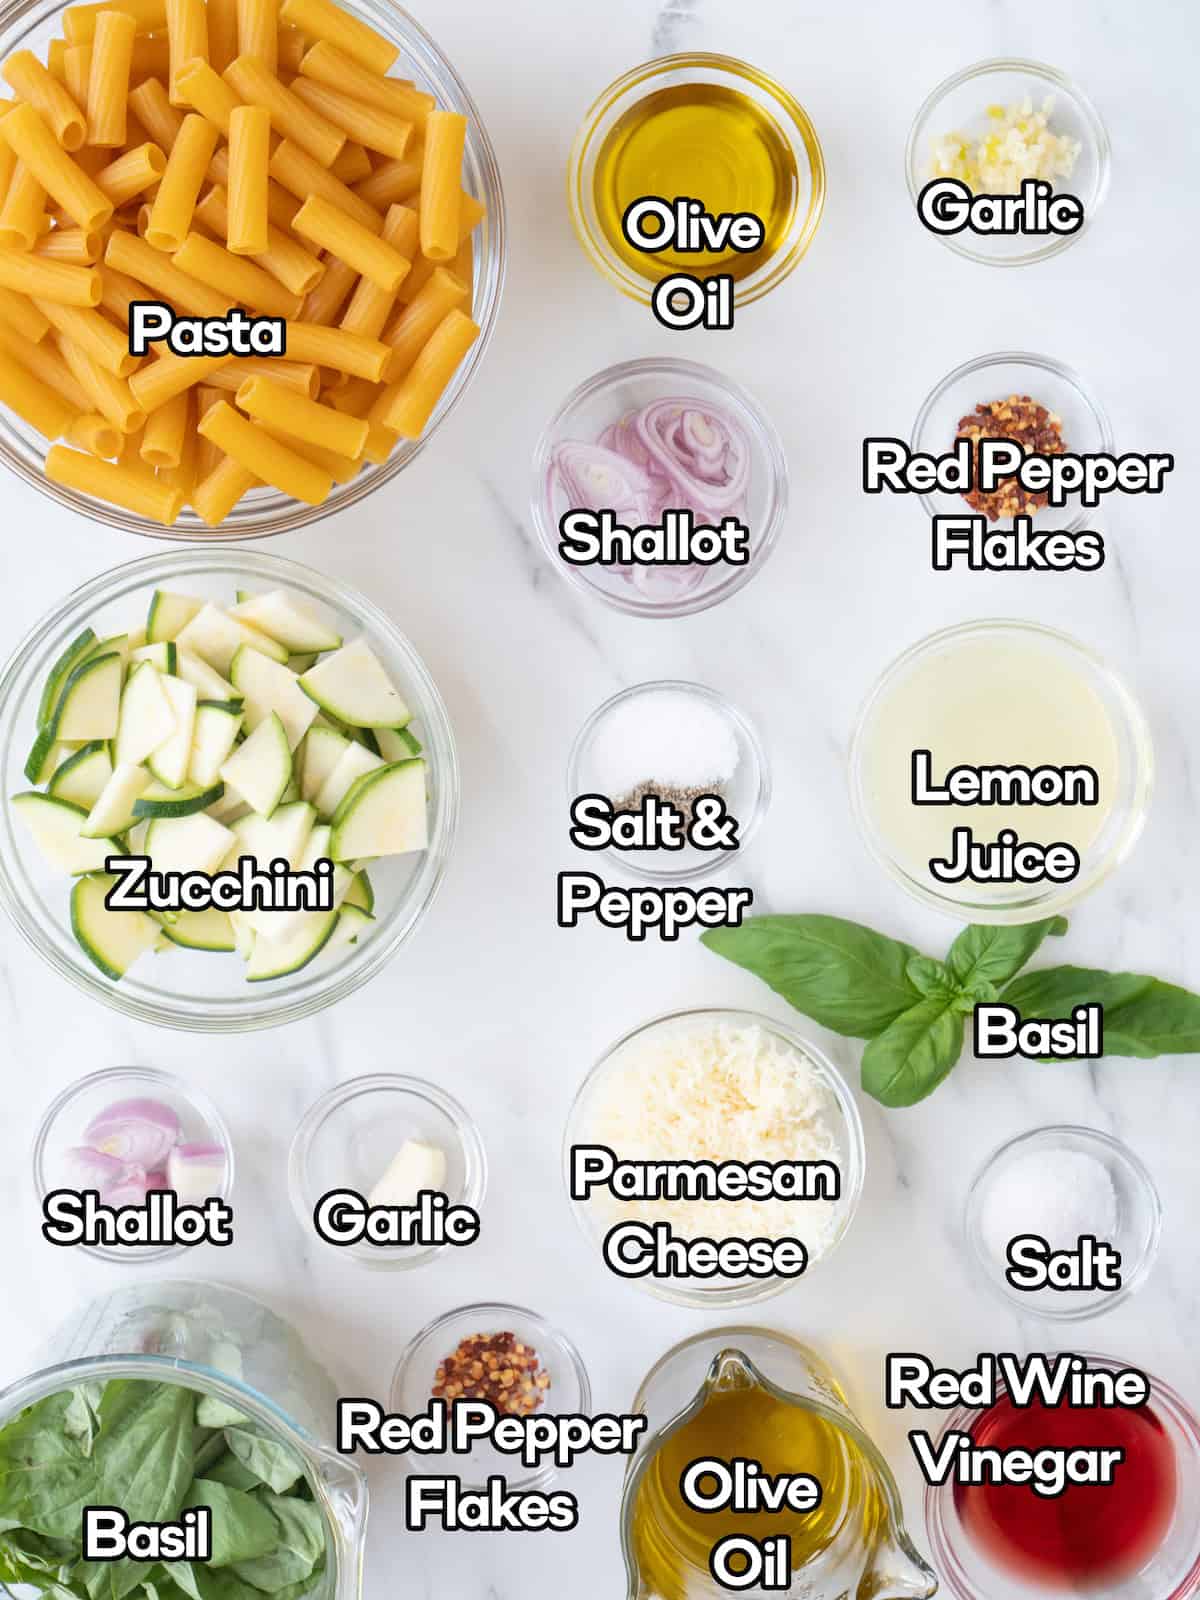 Mise en place of all ingredients to make basil vinaigrette pasta.